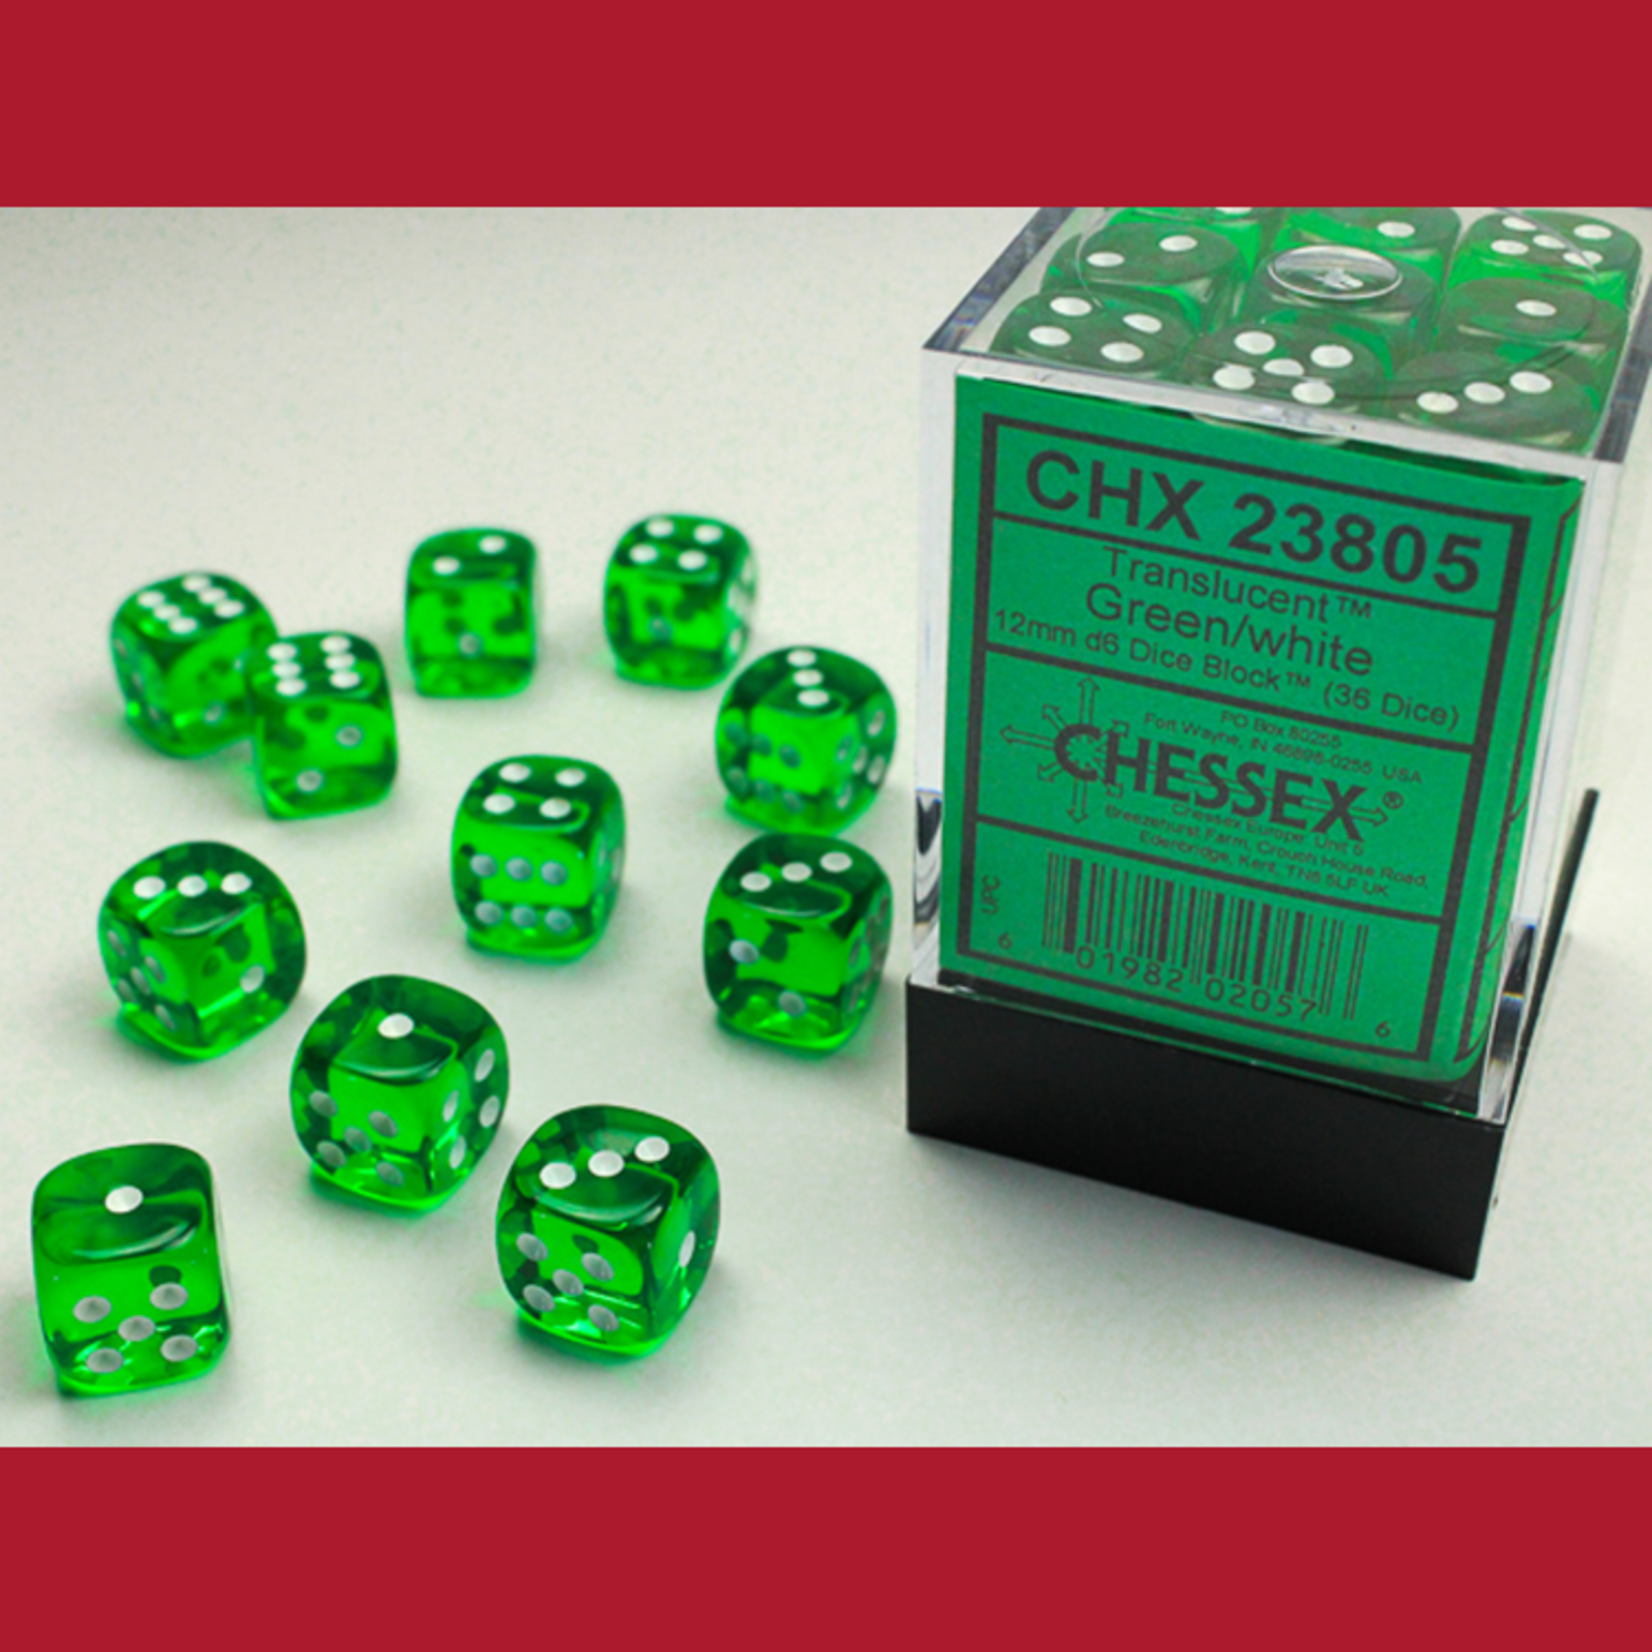 Chessex CHX 23805 Translucent Green / White 12mm (36d6)